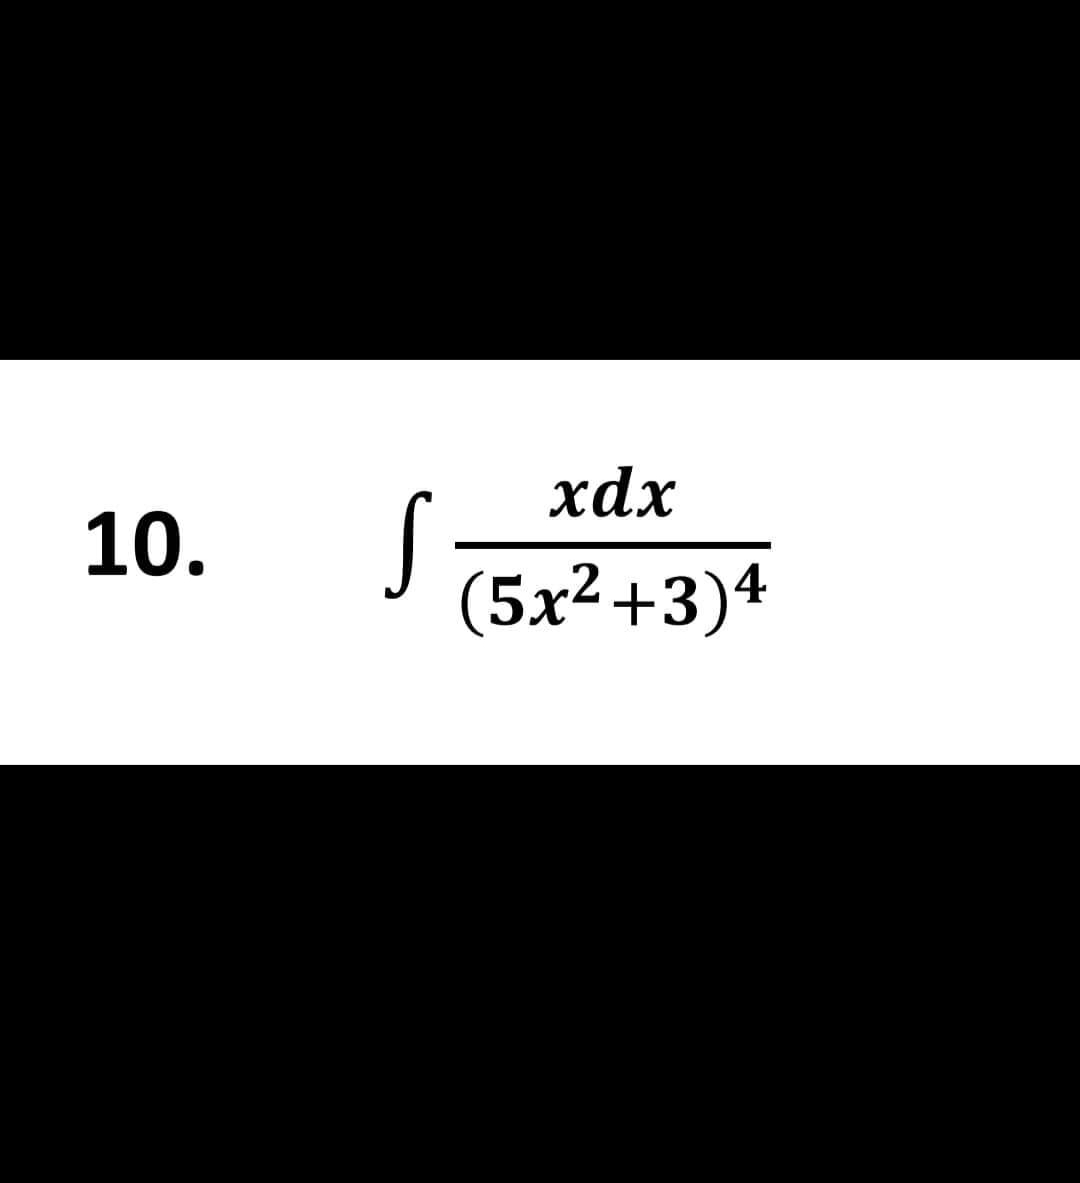 10.
S
xdx
(5x2+3)4